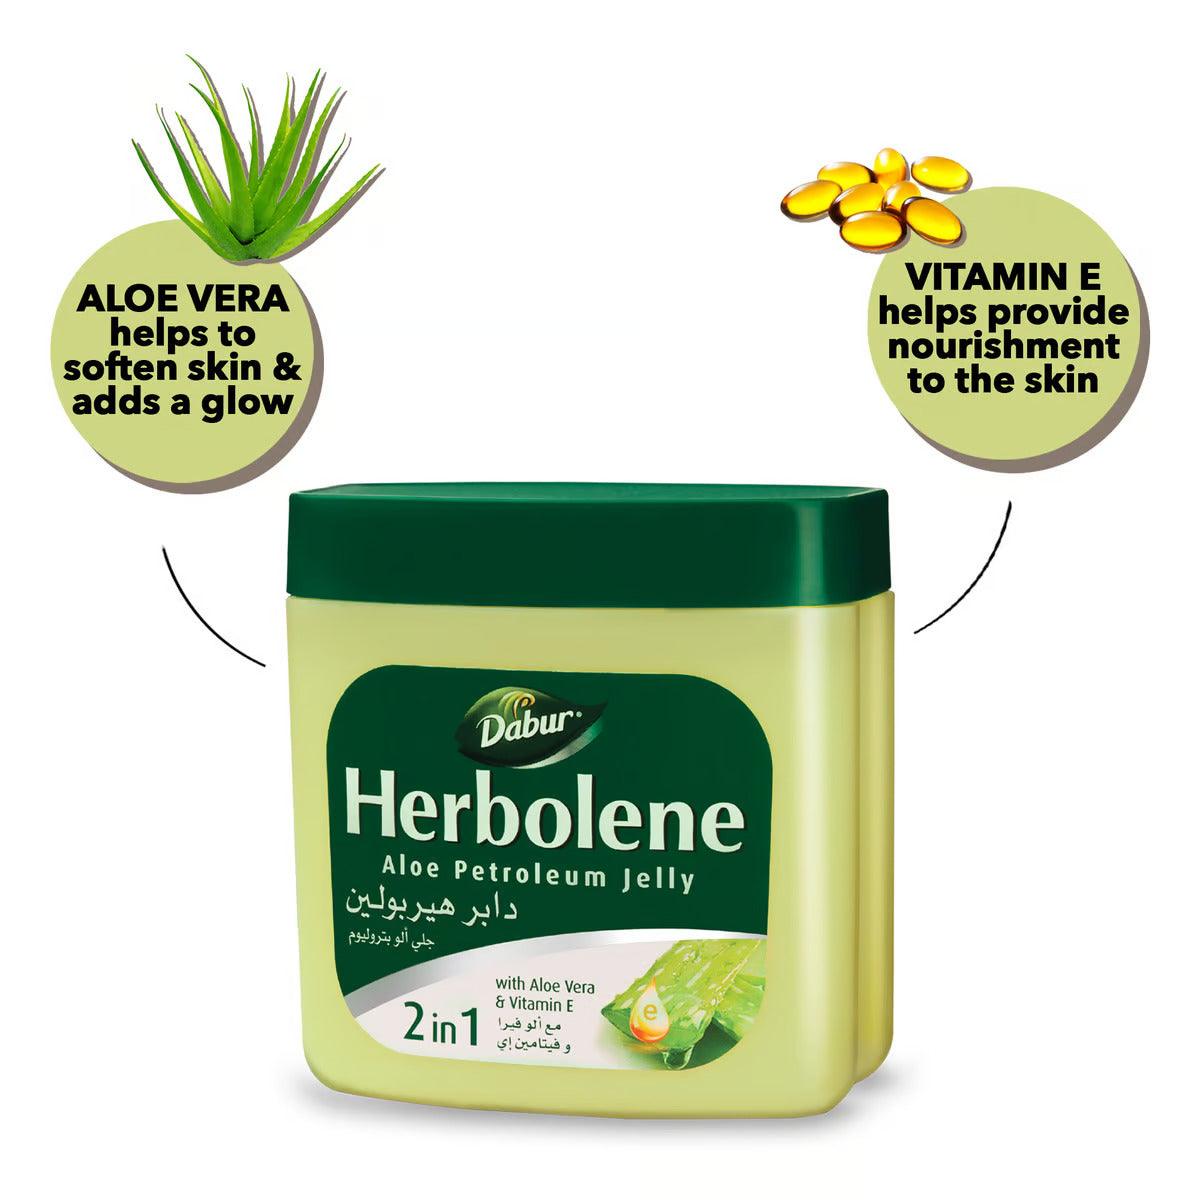 Dabur Herbolene Aloe Petroleum Jelly - Wellness Shoppee